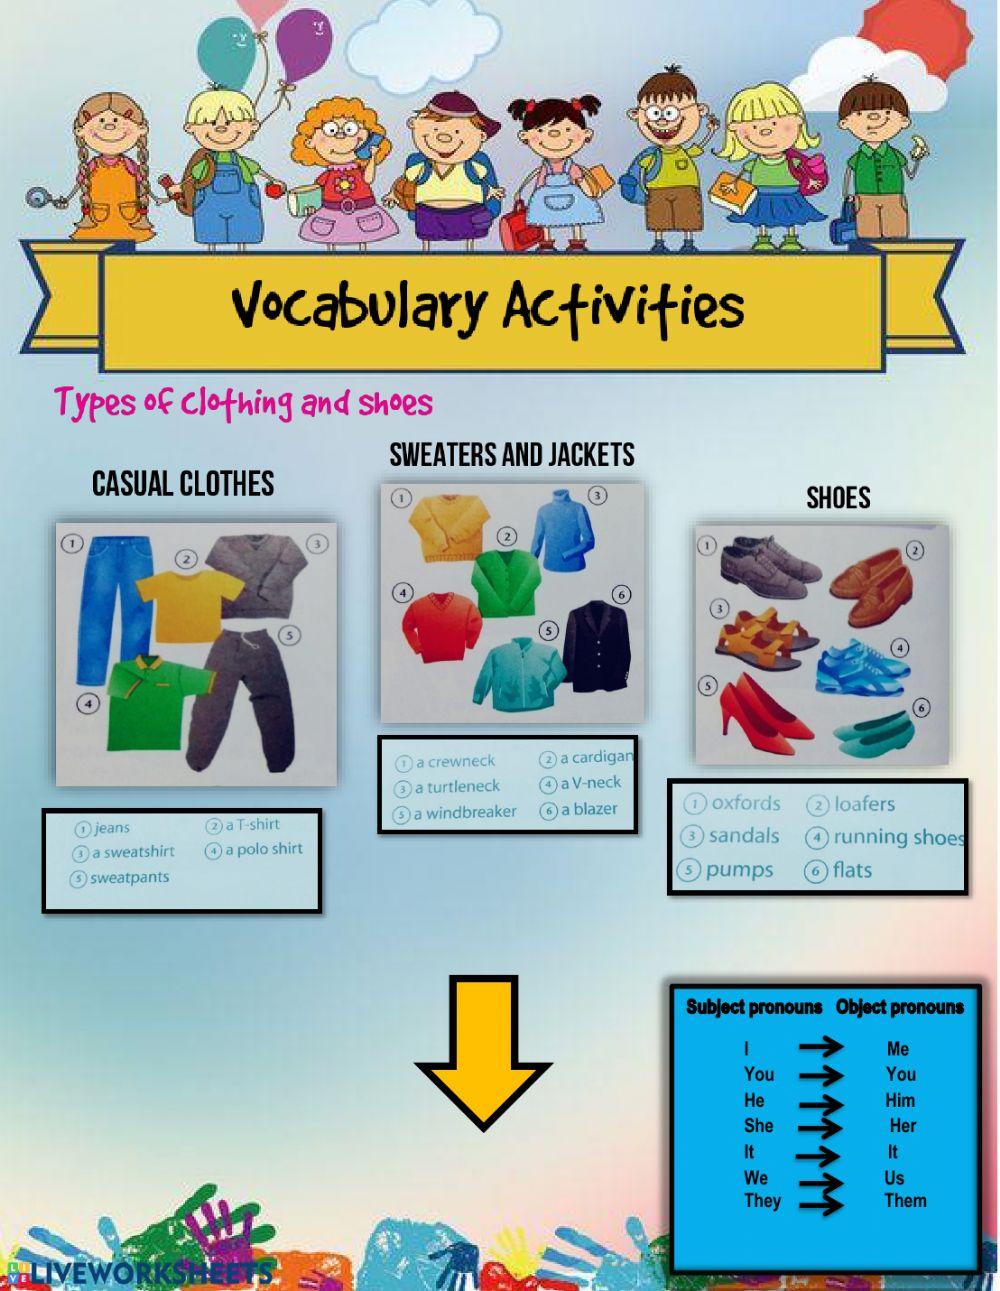 Vocabulary activities